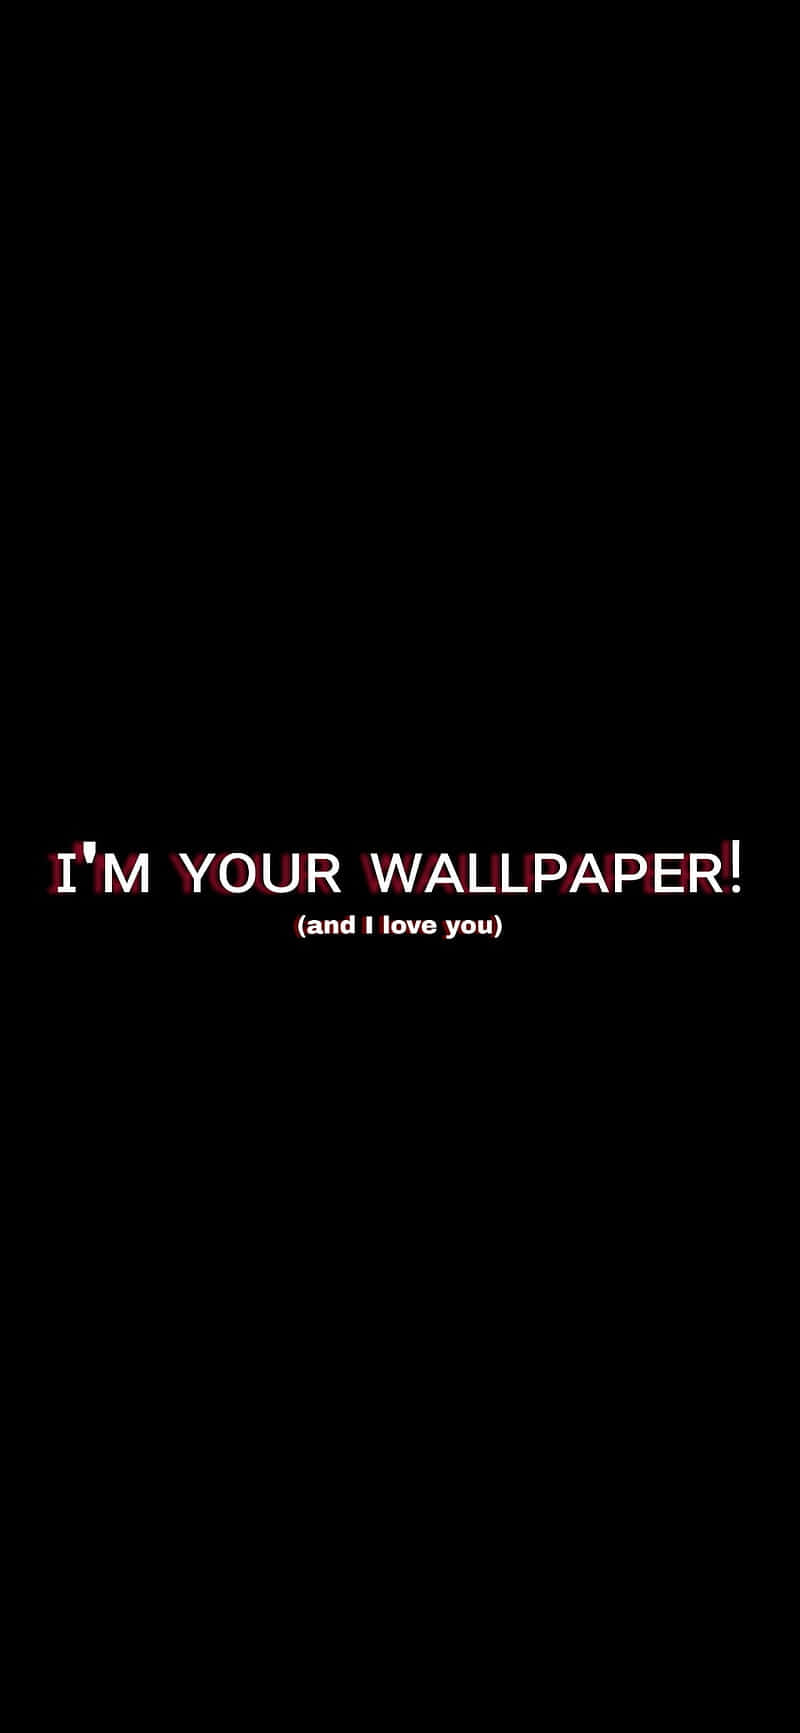 I'm Your Wallpaper - Wallpapers Wallpaper